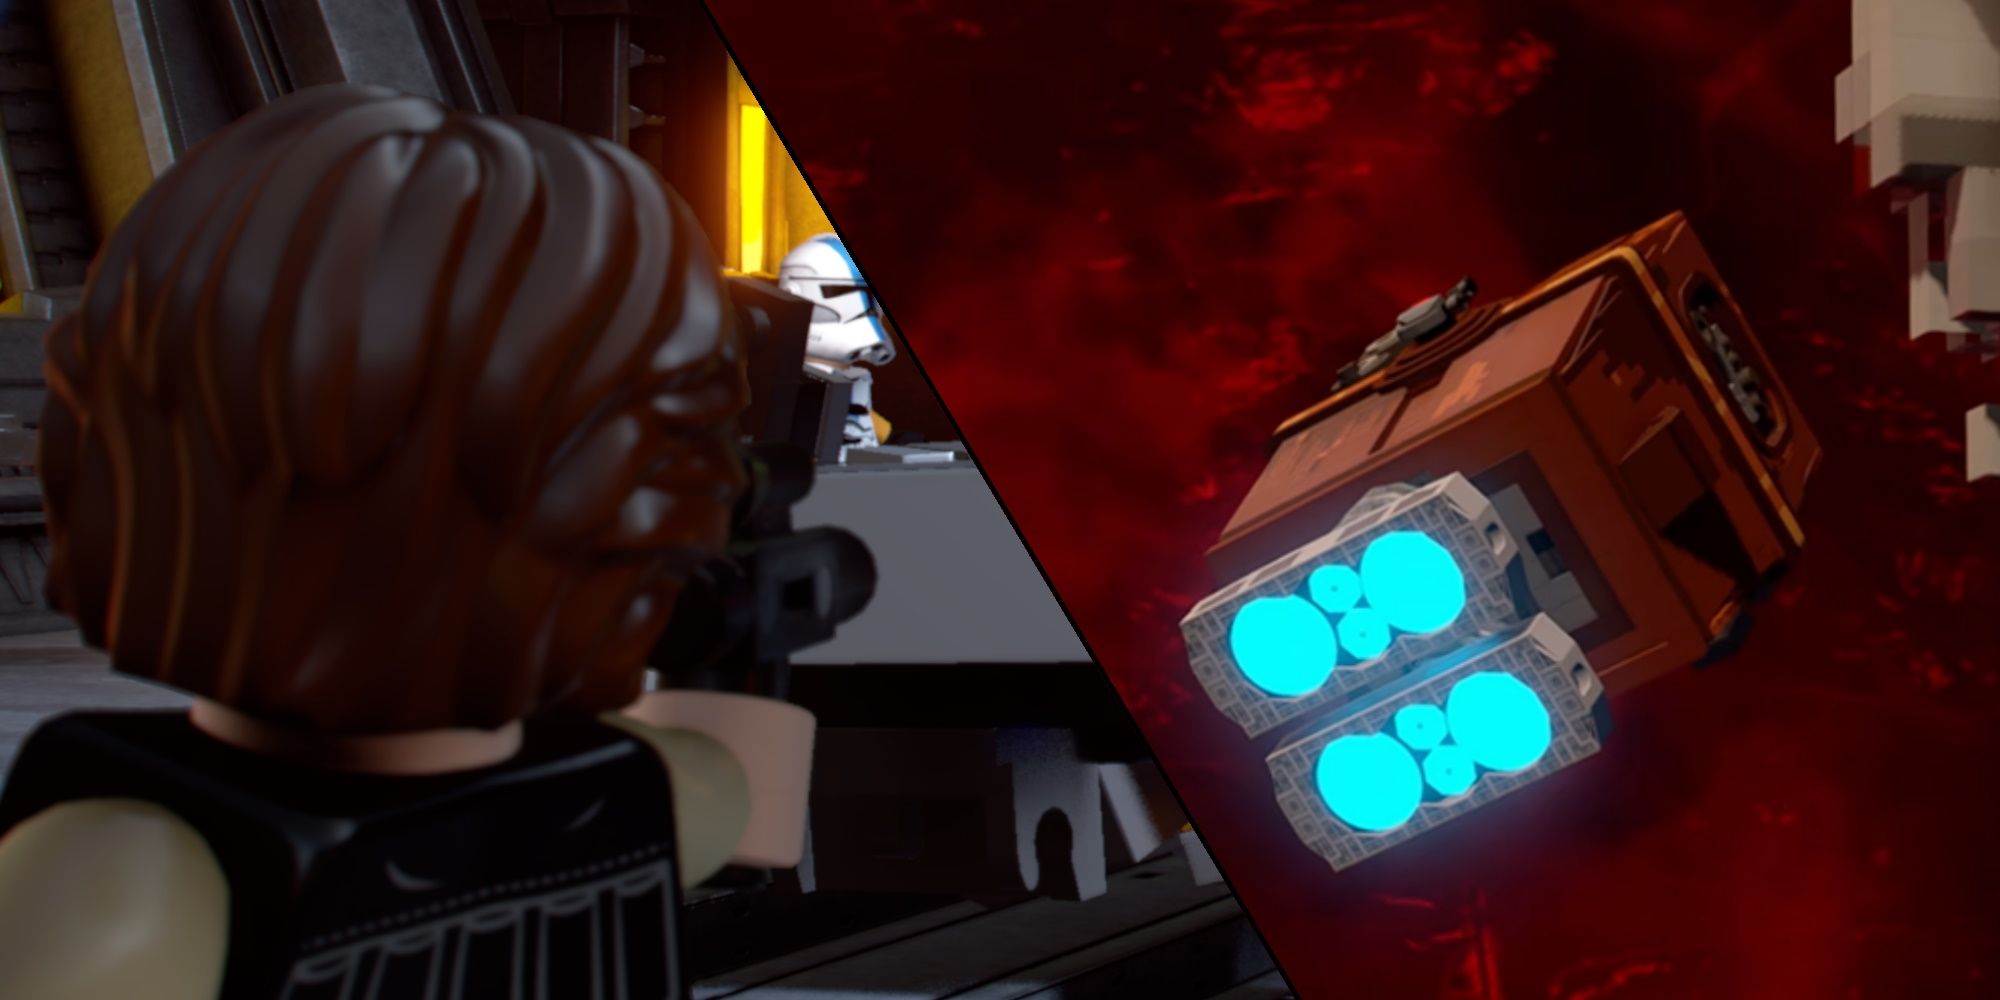 REVIEW, A Força é forte em LEGO Star Wars: A Saga Skywalker, by Sagitta  Tech